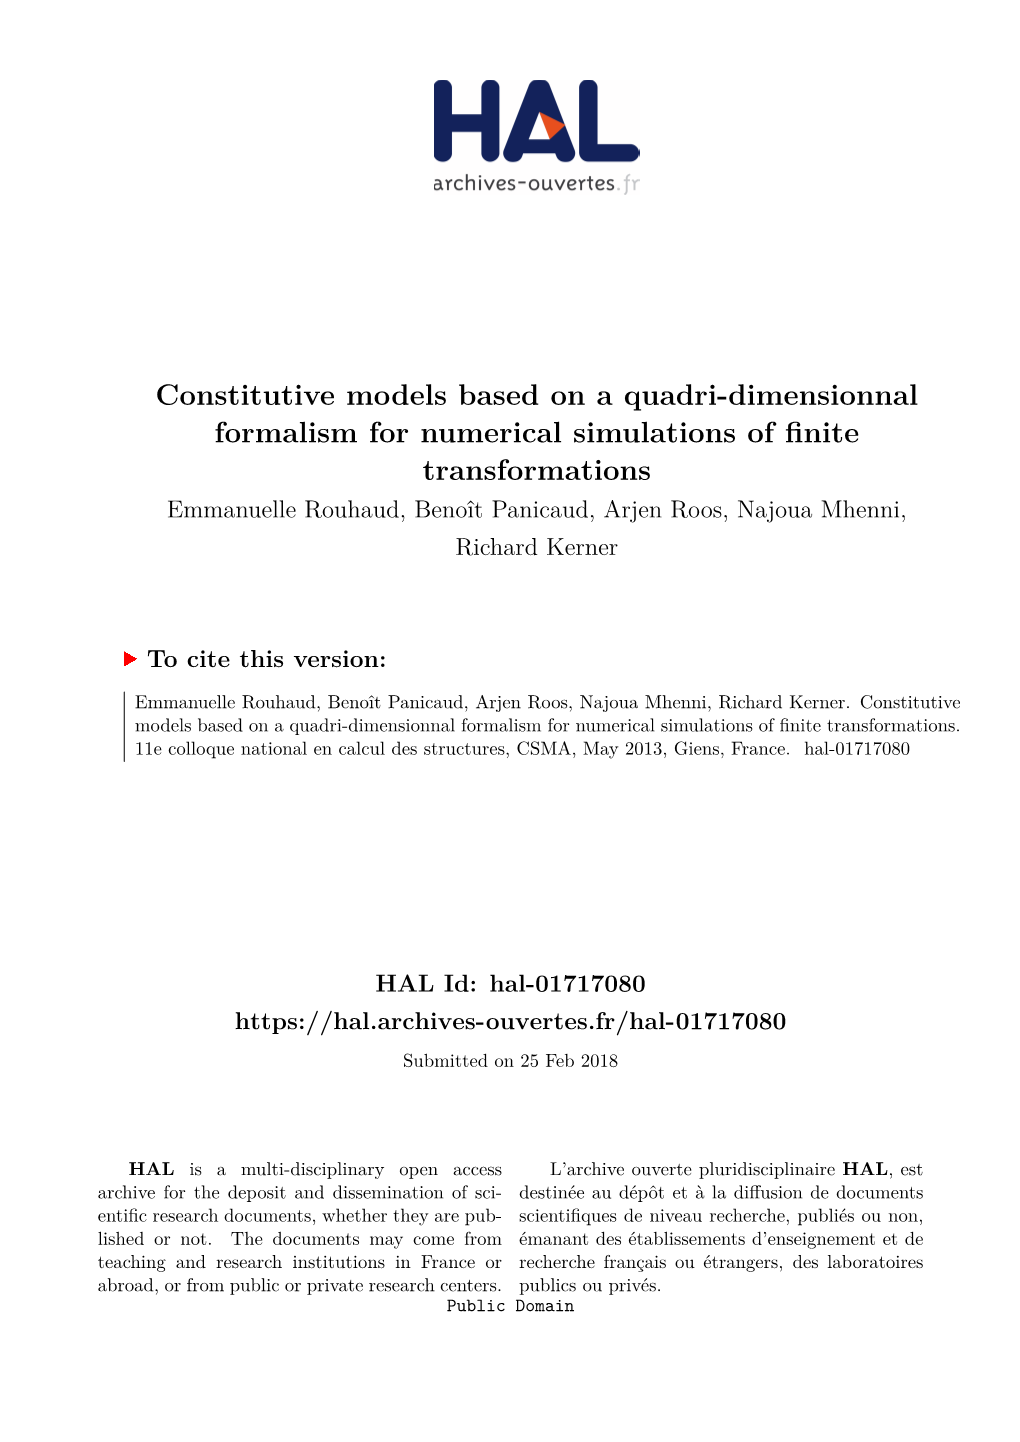 Constitutive Models Based on a Quadri-Dimensionnal Formalism For